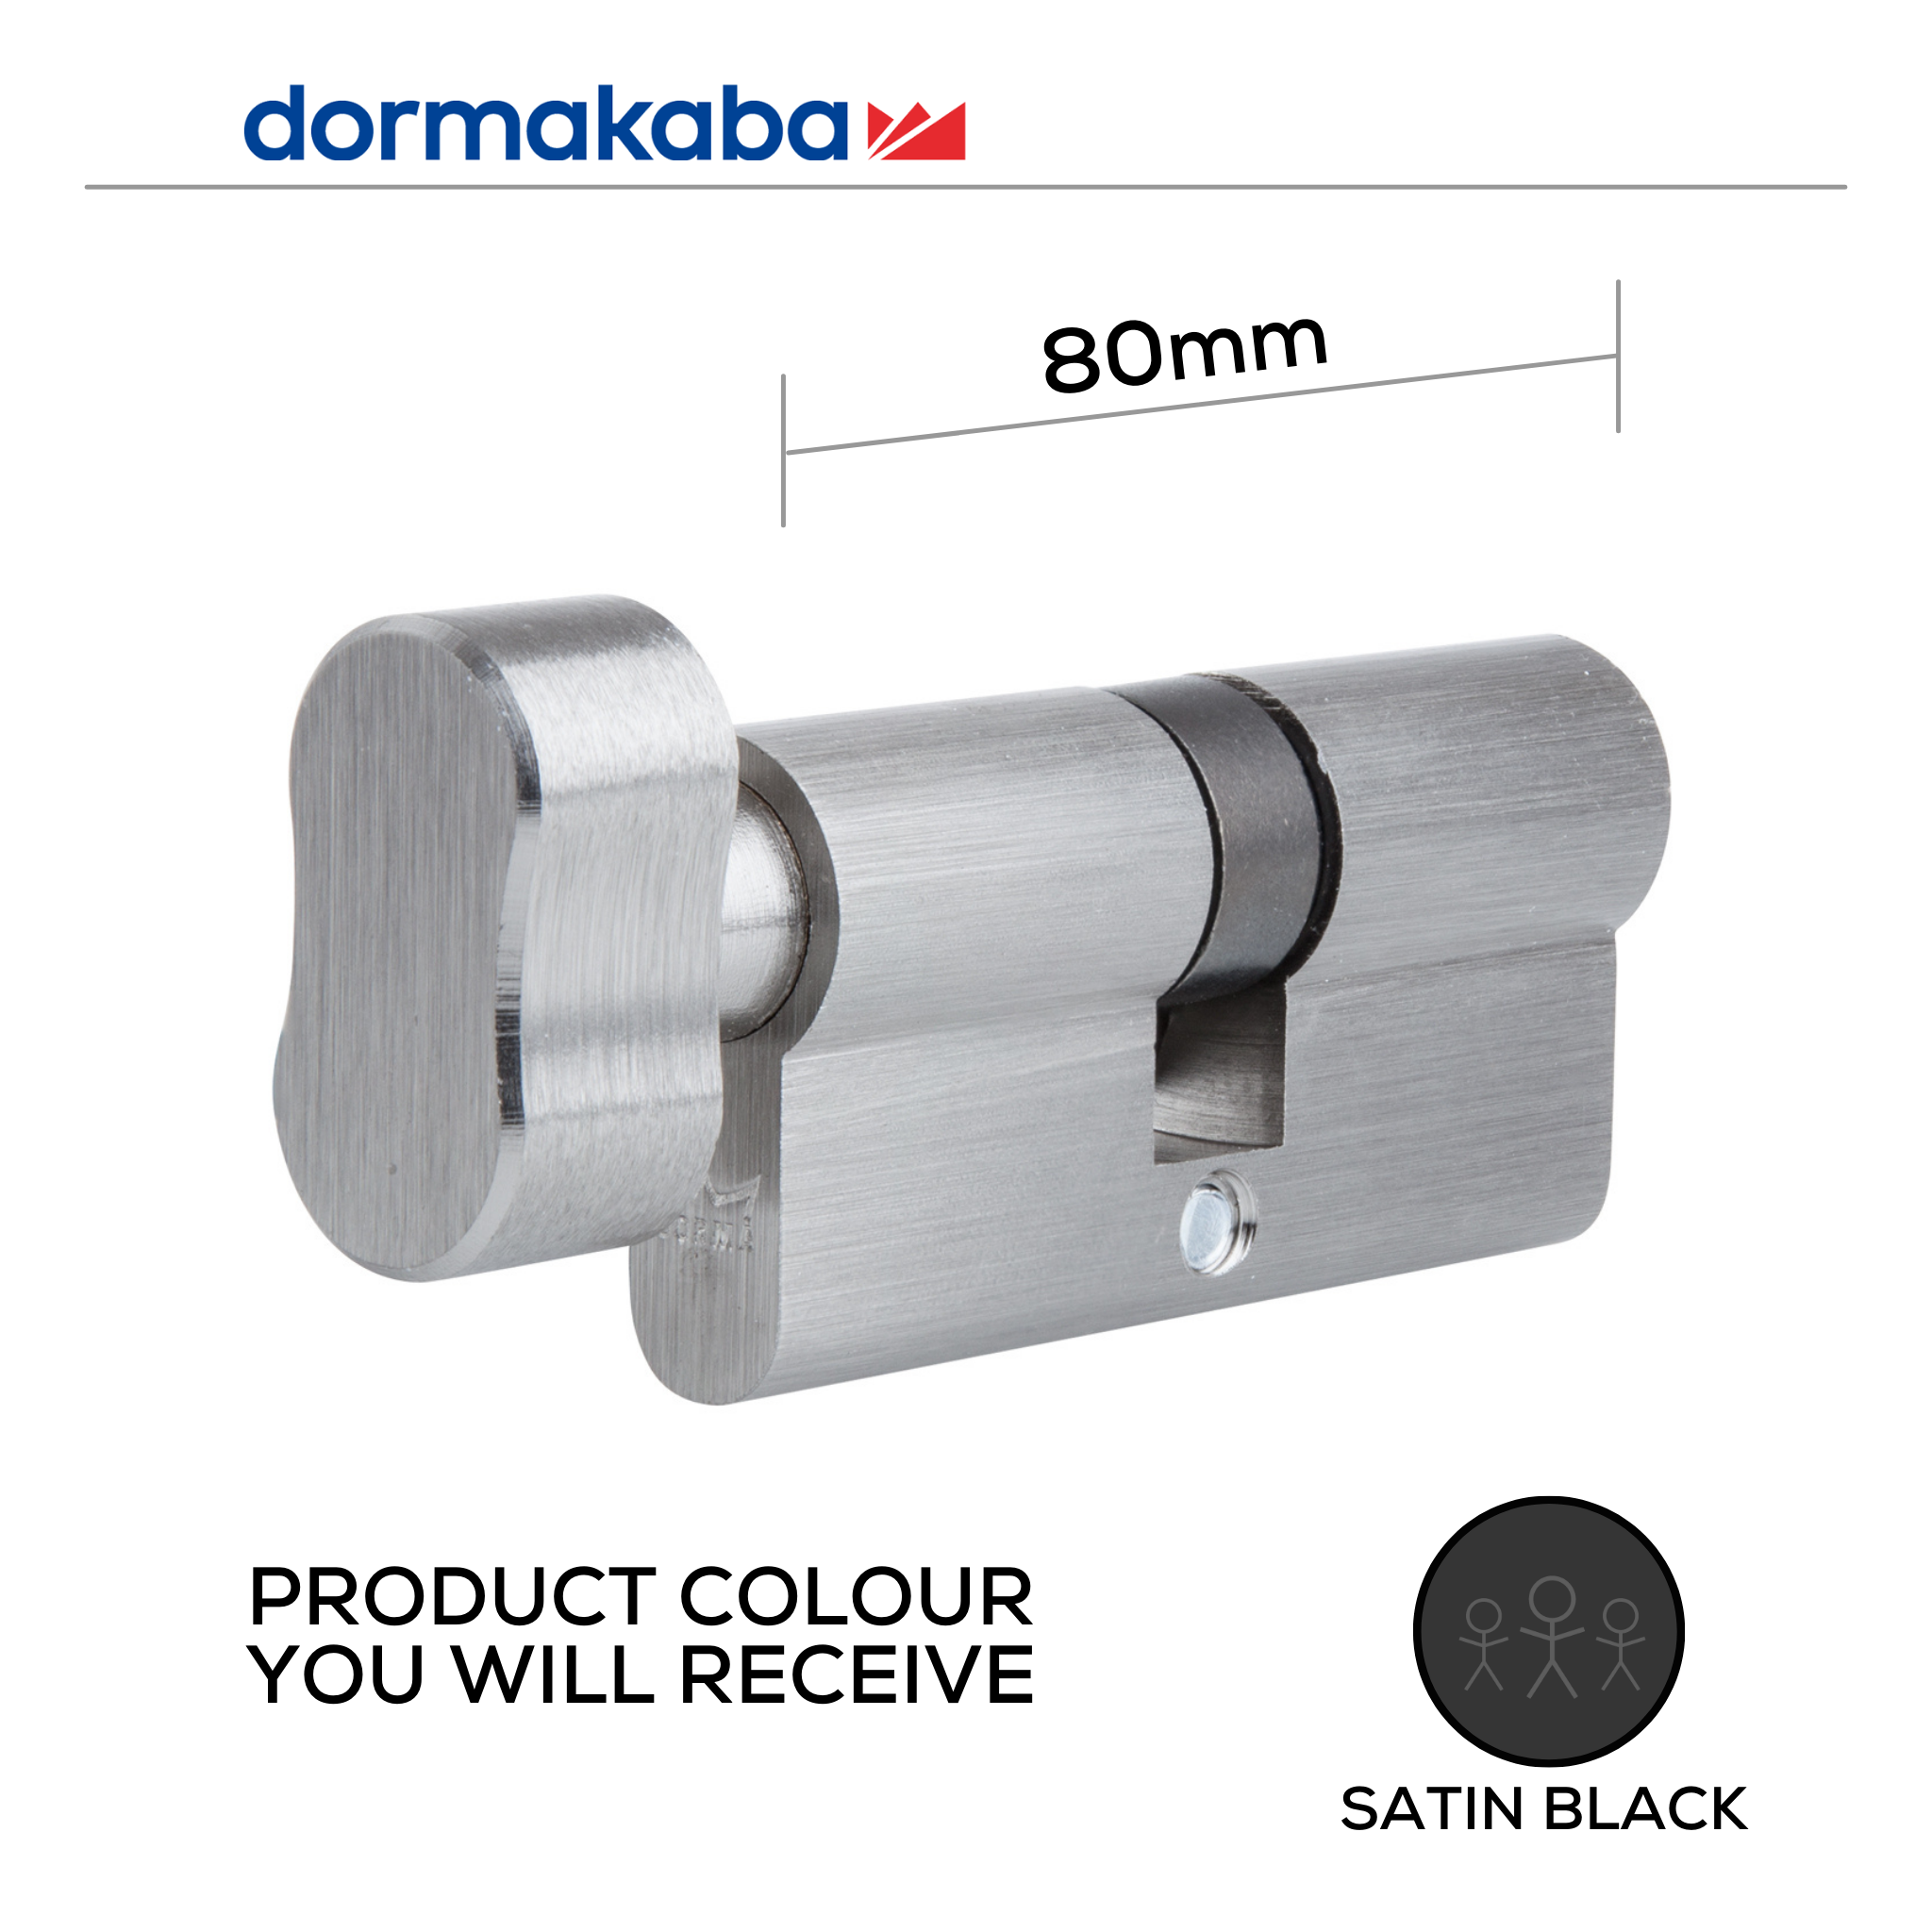 DKC208002 KD, 80mm (l), Knob, Cylinder, Keyed Different, 5 Pin, Satin Black, DORMAKABA